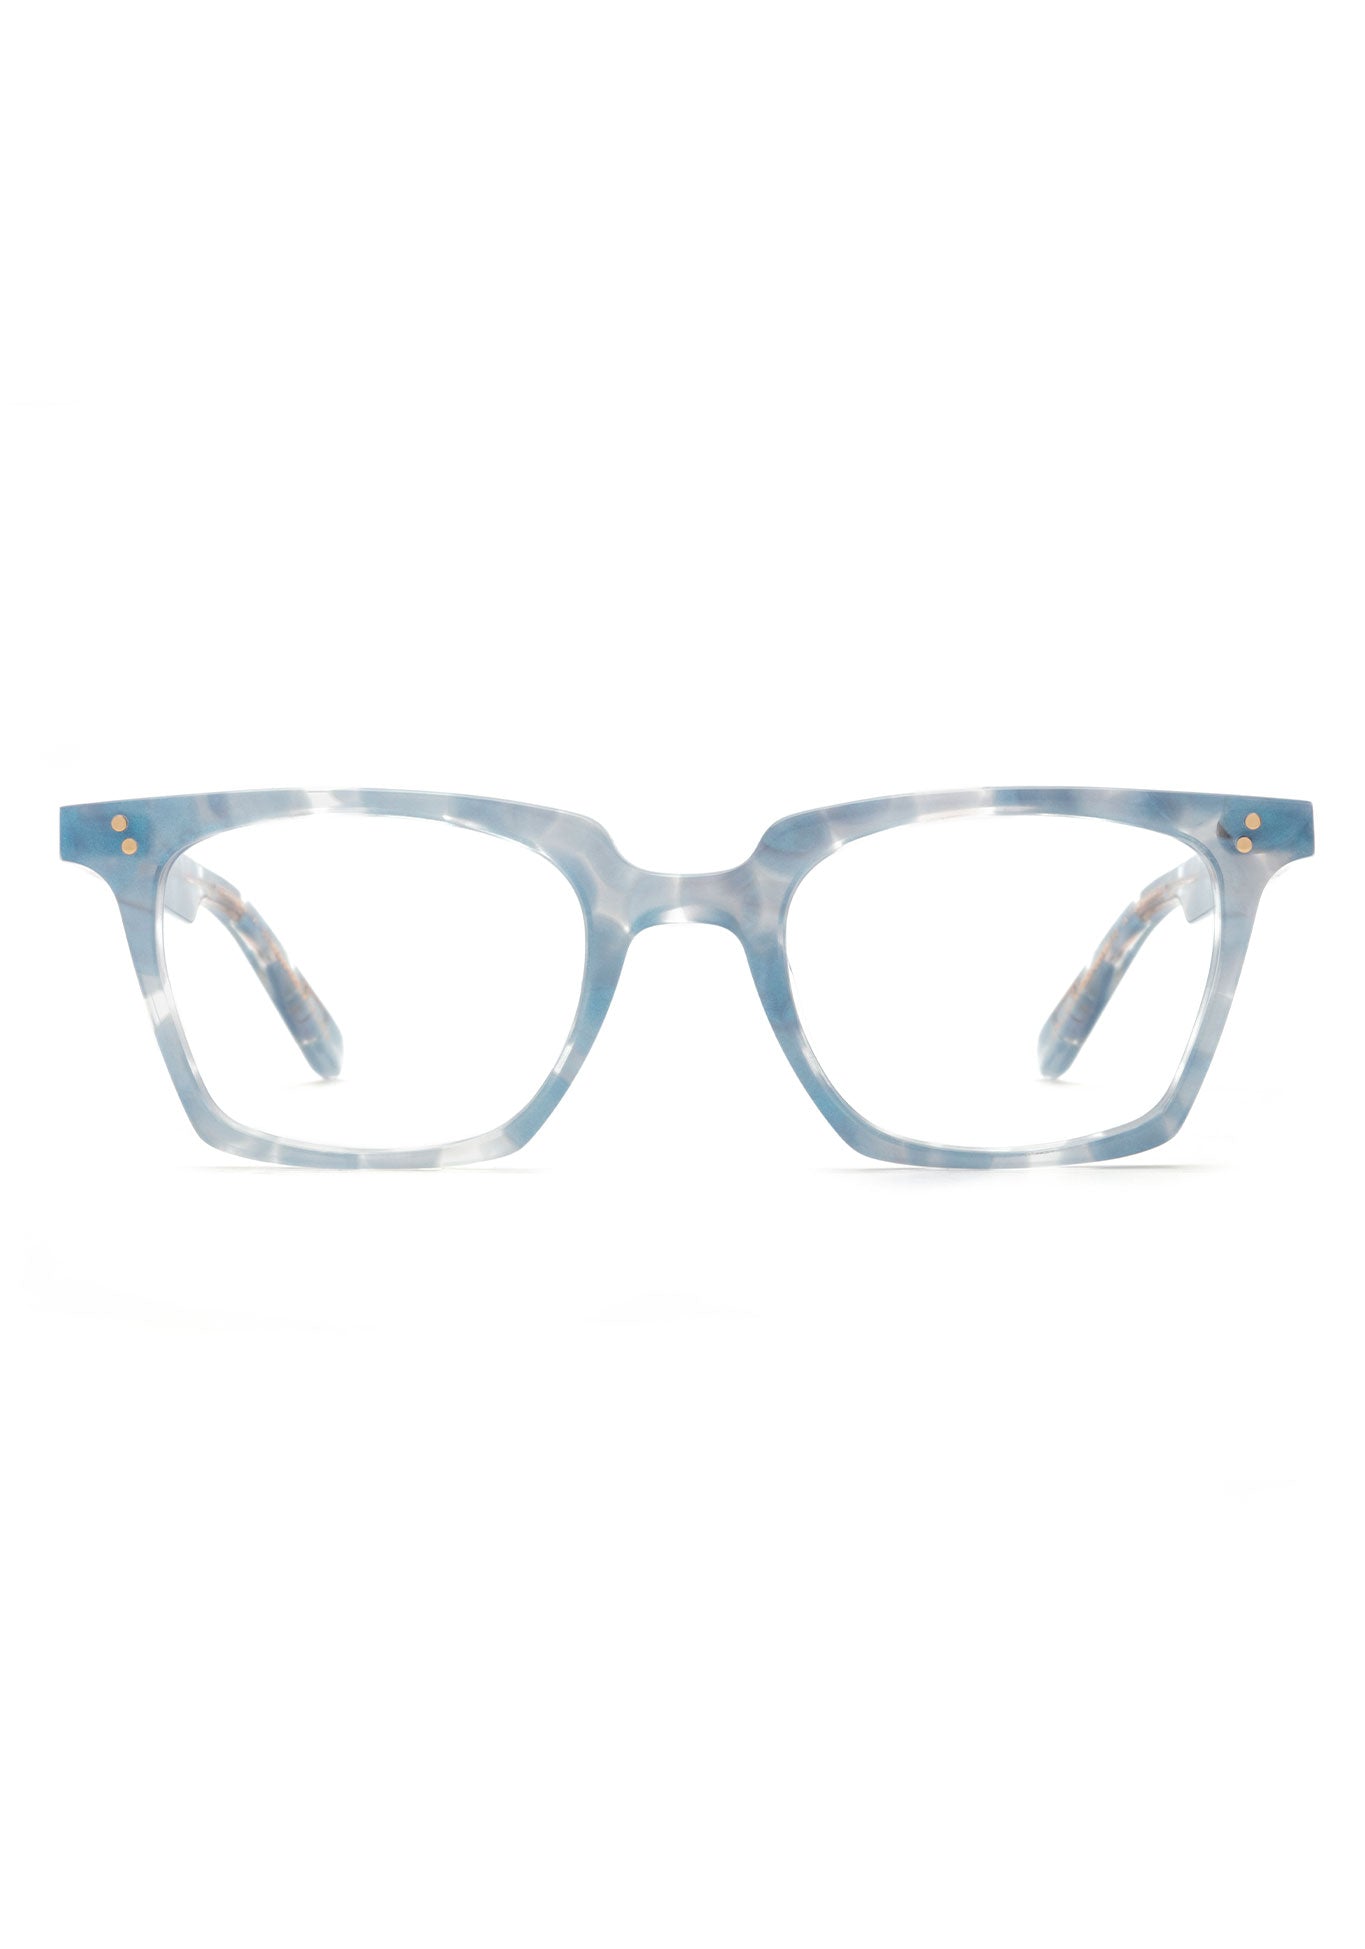 Krewe St. Louis Classics Matte Tokyo Tortoise Polarized 24K - Green Polarized Lens - Specs Eyewear